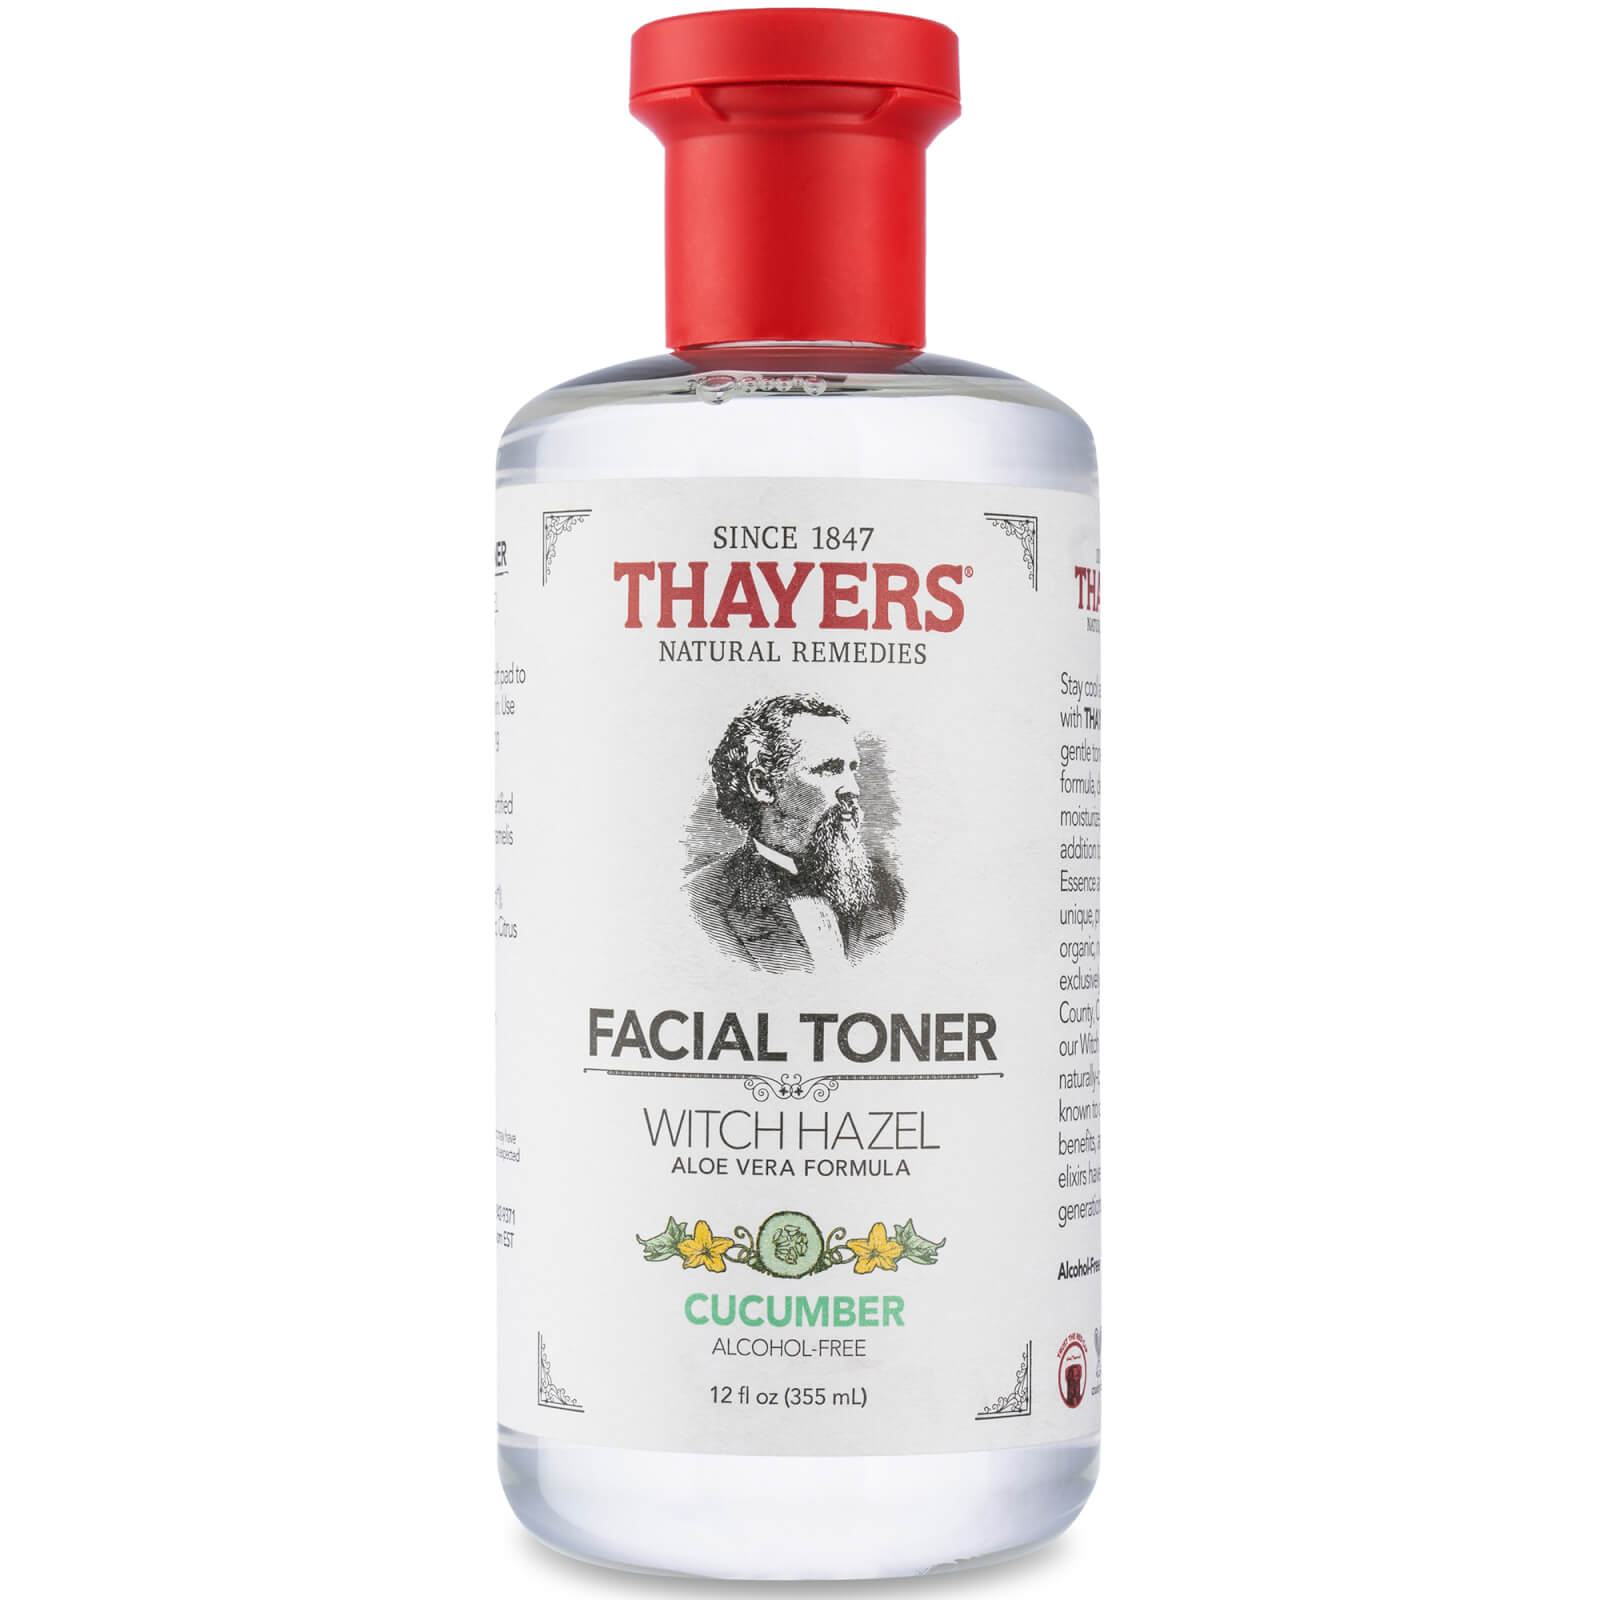 Thayers Natural Remedies Thayers Cucumber Facial Toner 335ml